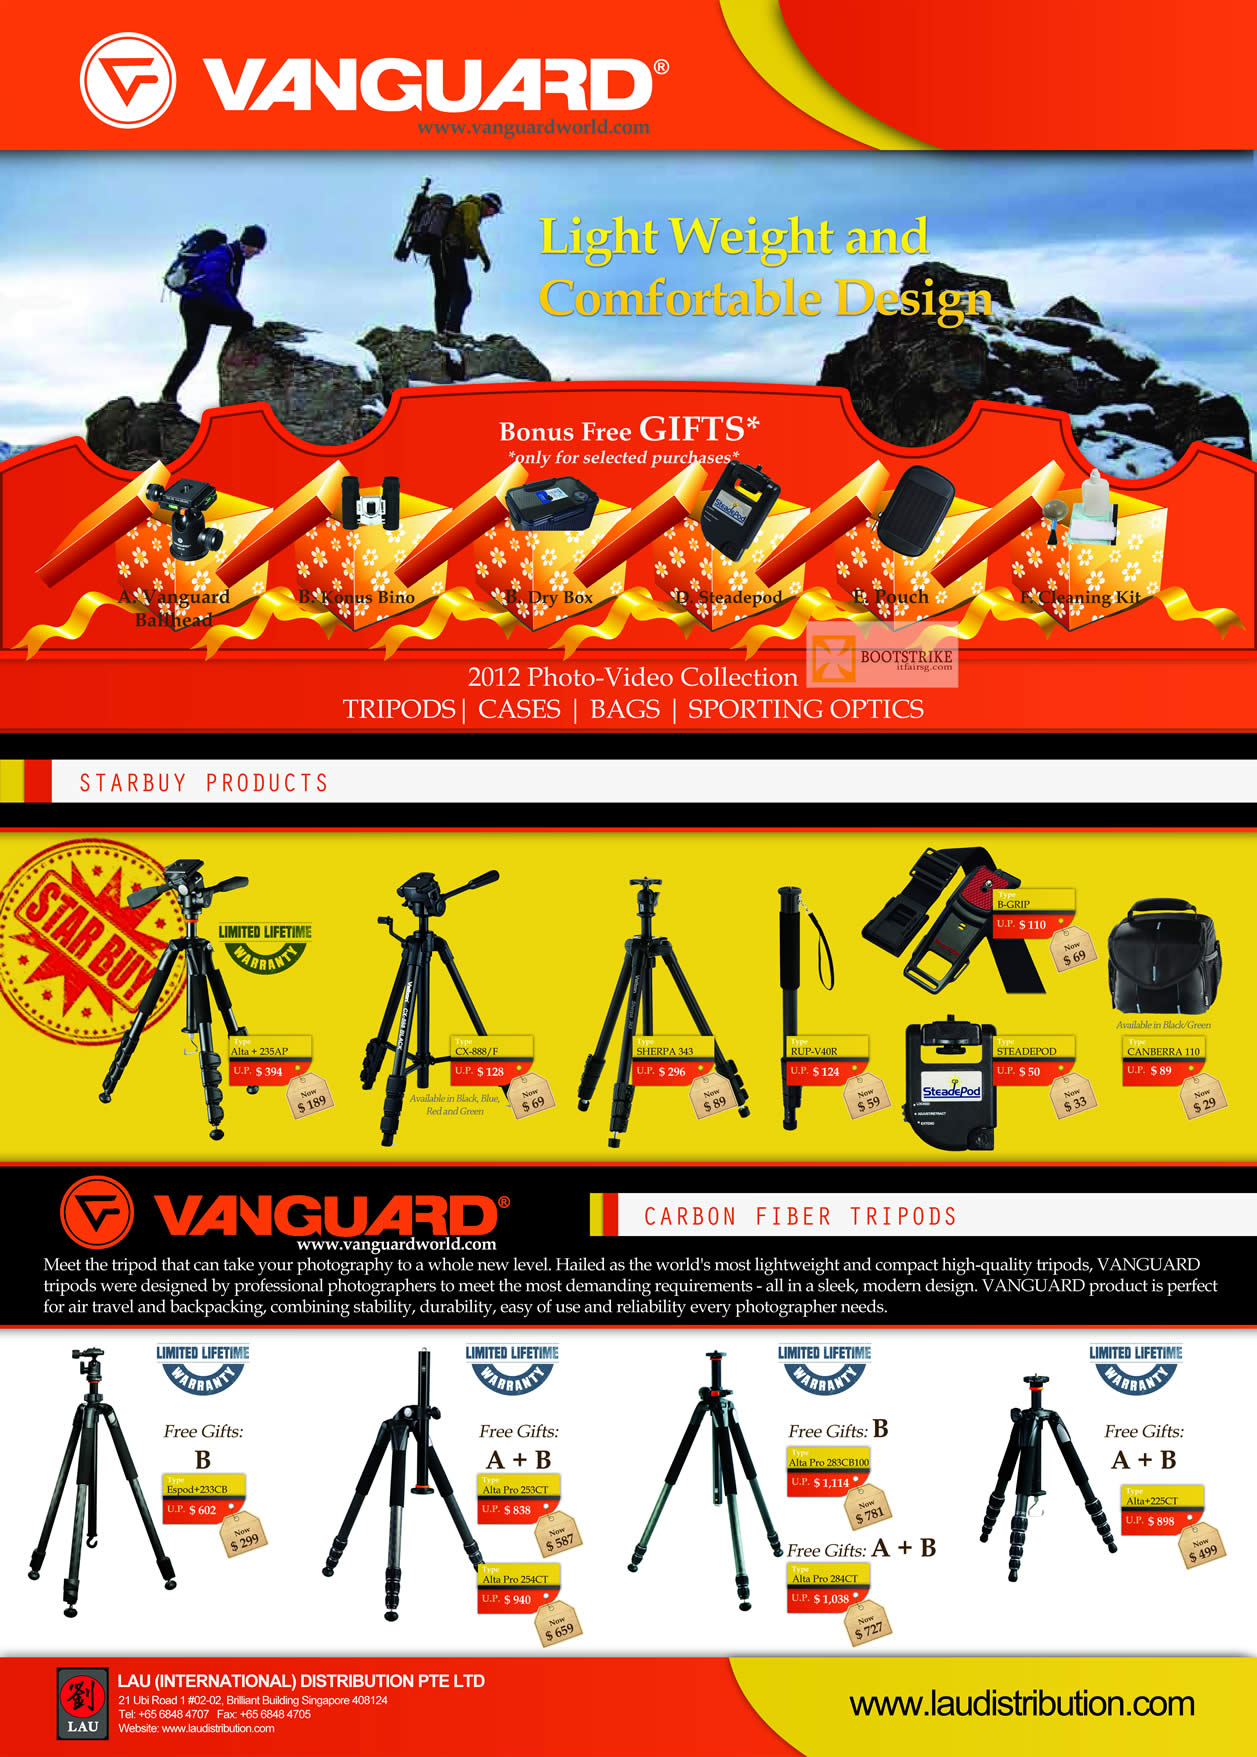 IT SHOW 2012 price list image brochure of Lau Intl Vanguard Star Buys, Gifts, Carbon Fiber Tripods, Expod, Alta Pro